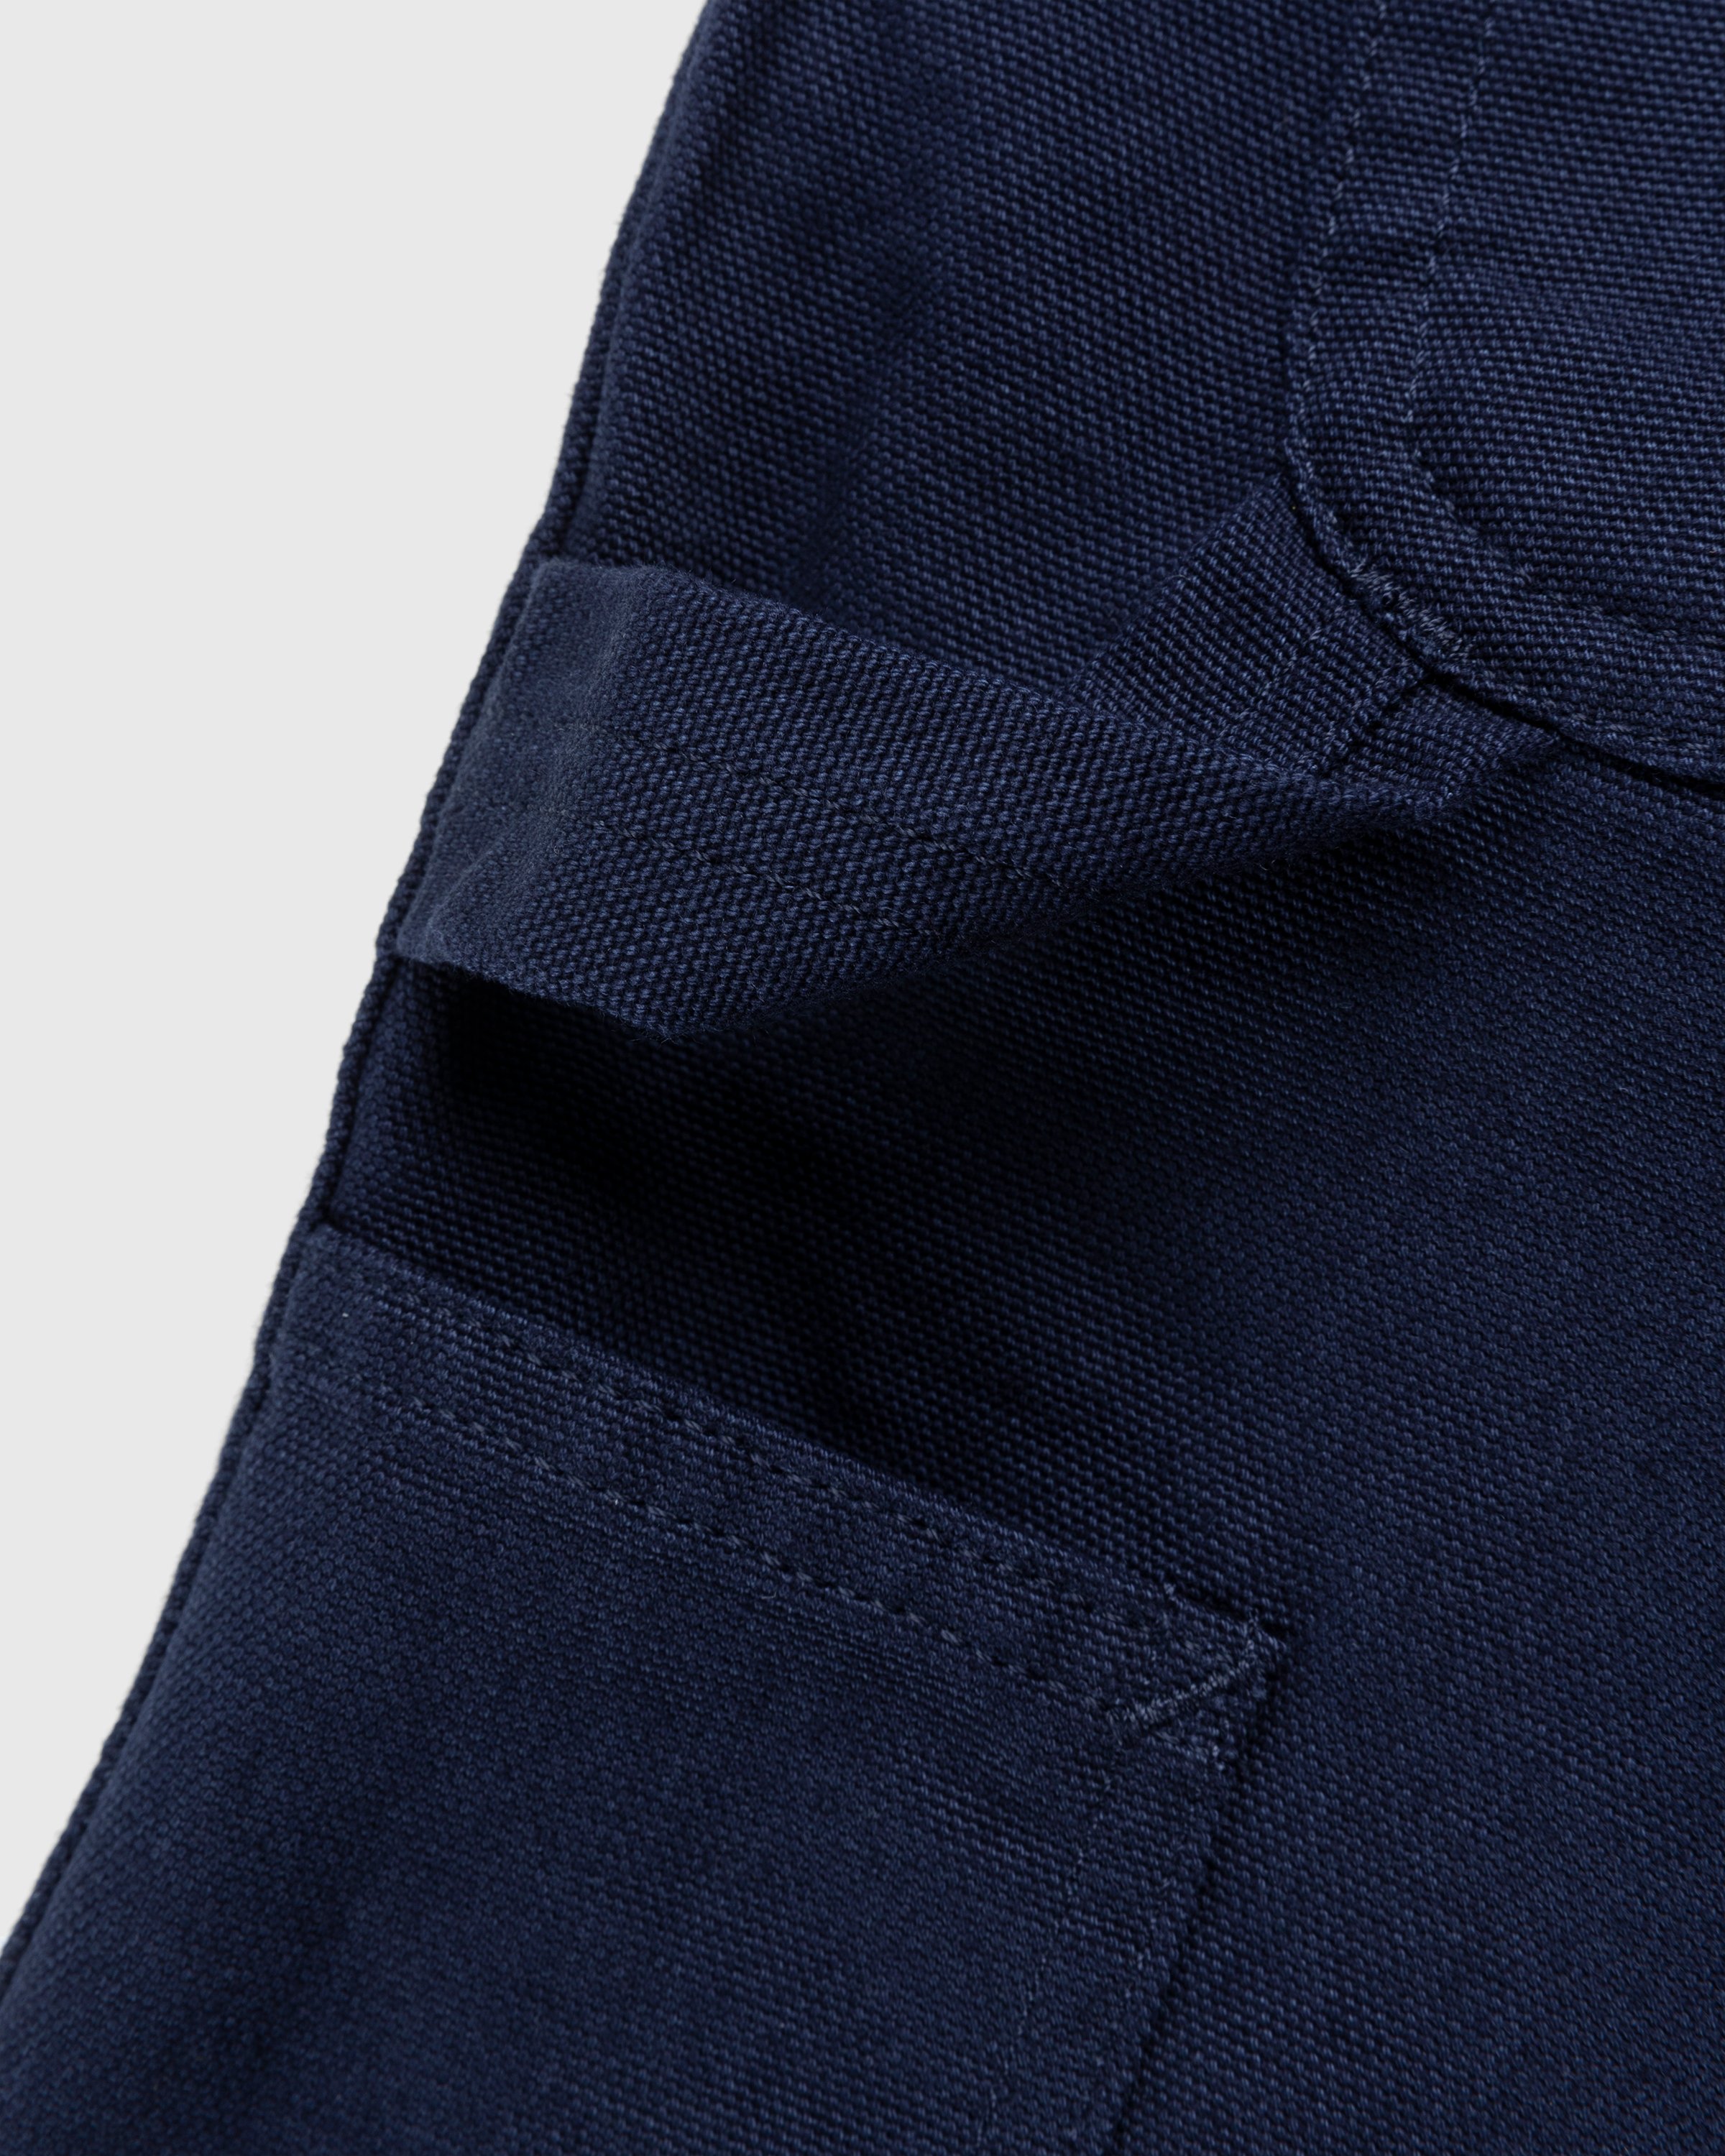 Carhartt WIP - Single Knee Short Dark Navy - Clothing - Black - Image 3